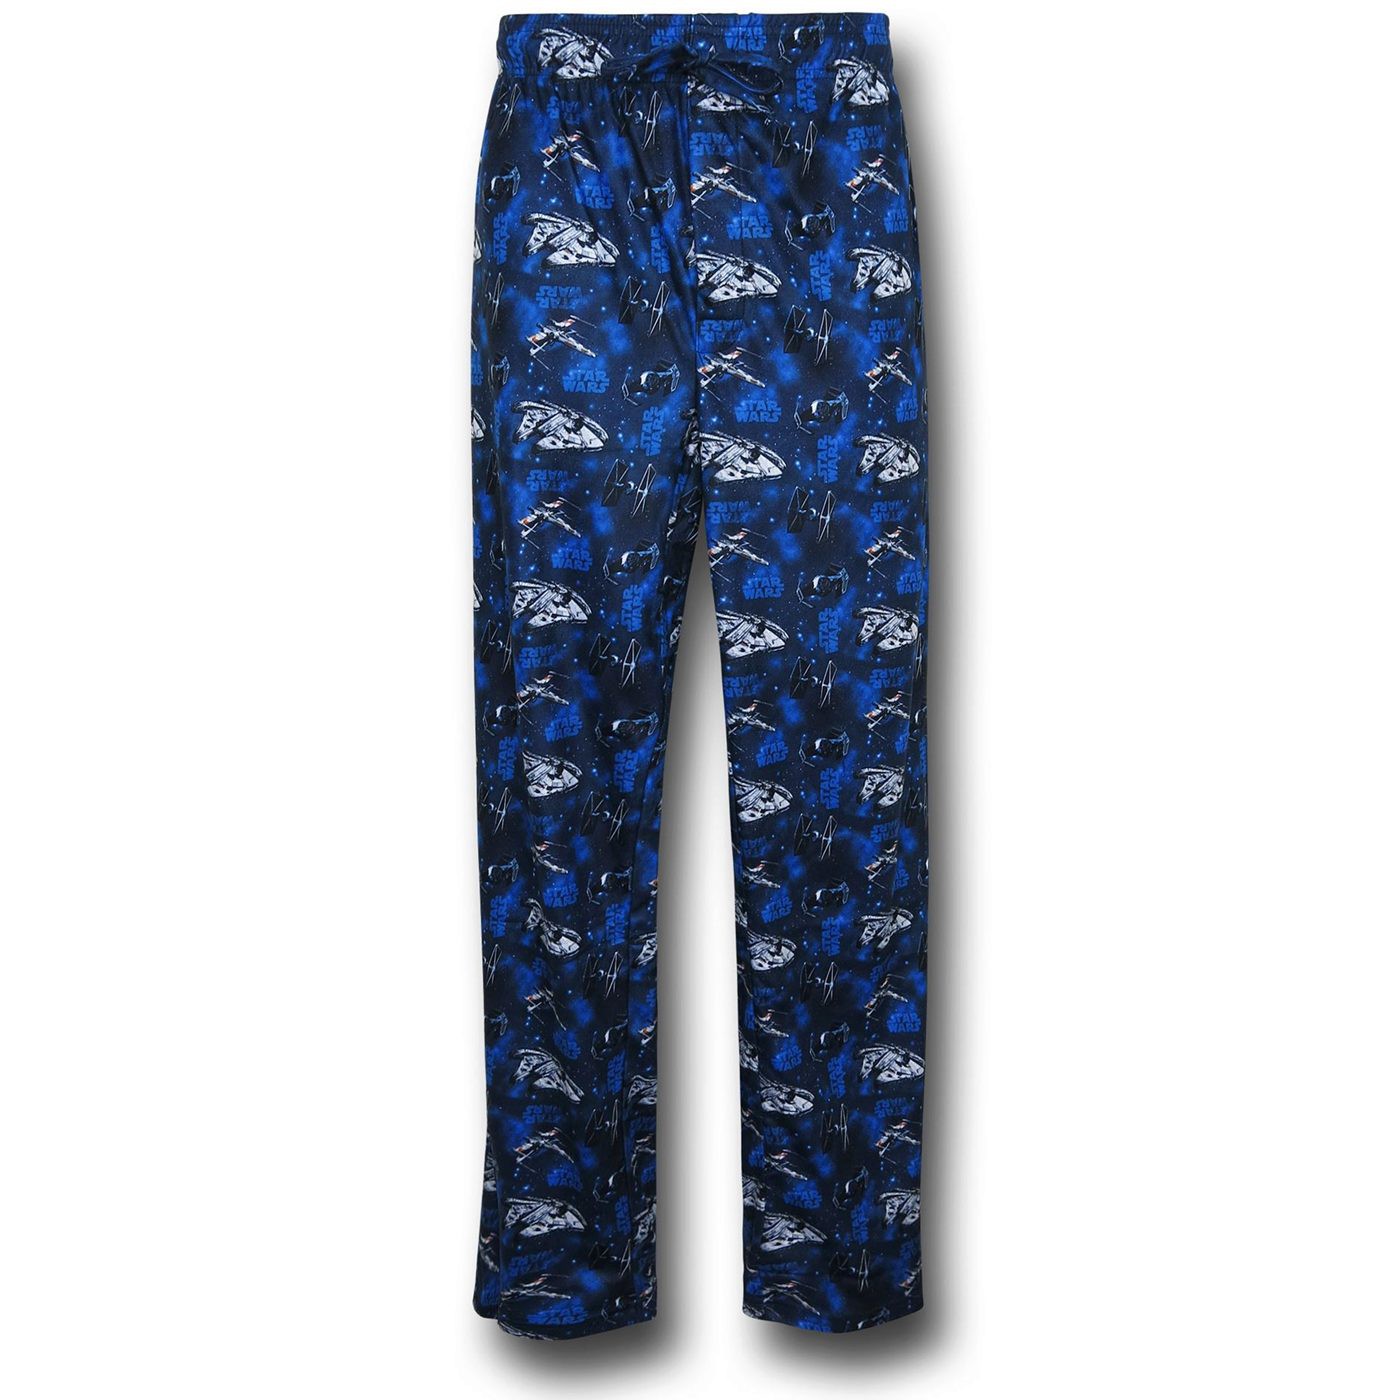 Star Wars Logo and Space Pajama Pants